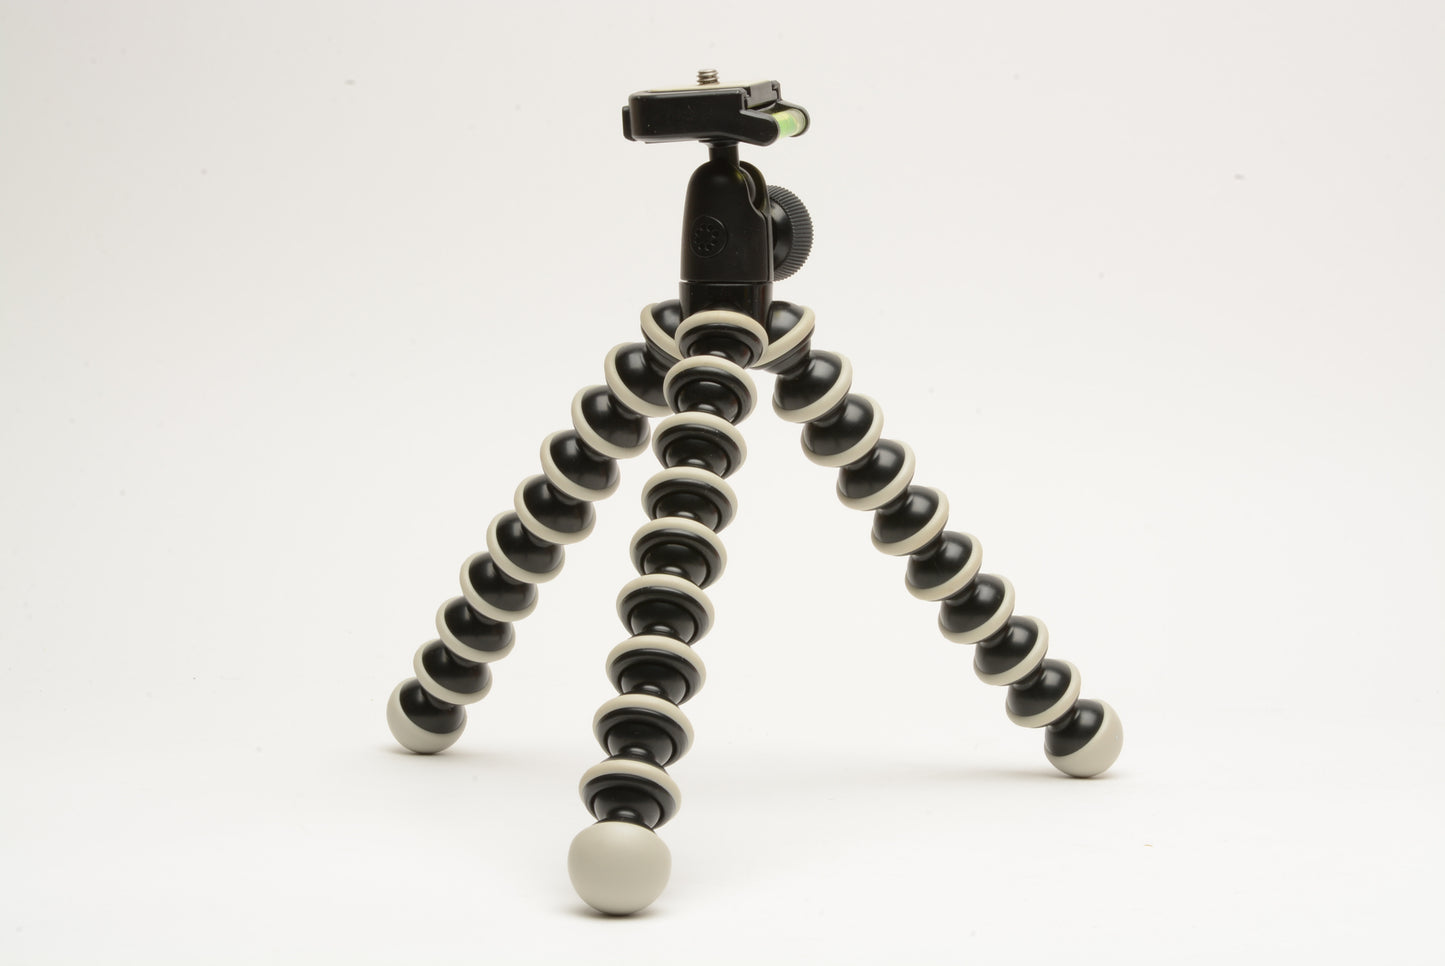 Joby GorillaPod Flexible Mini-Tripod with Ball Head + QR plate - Gray/Black